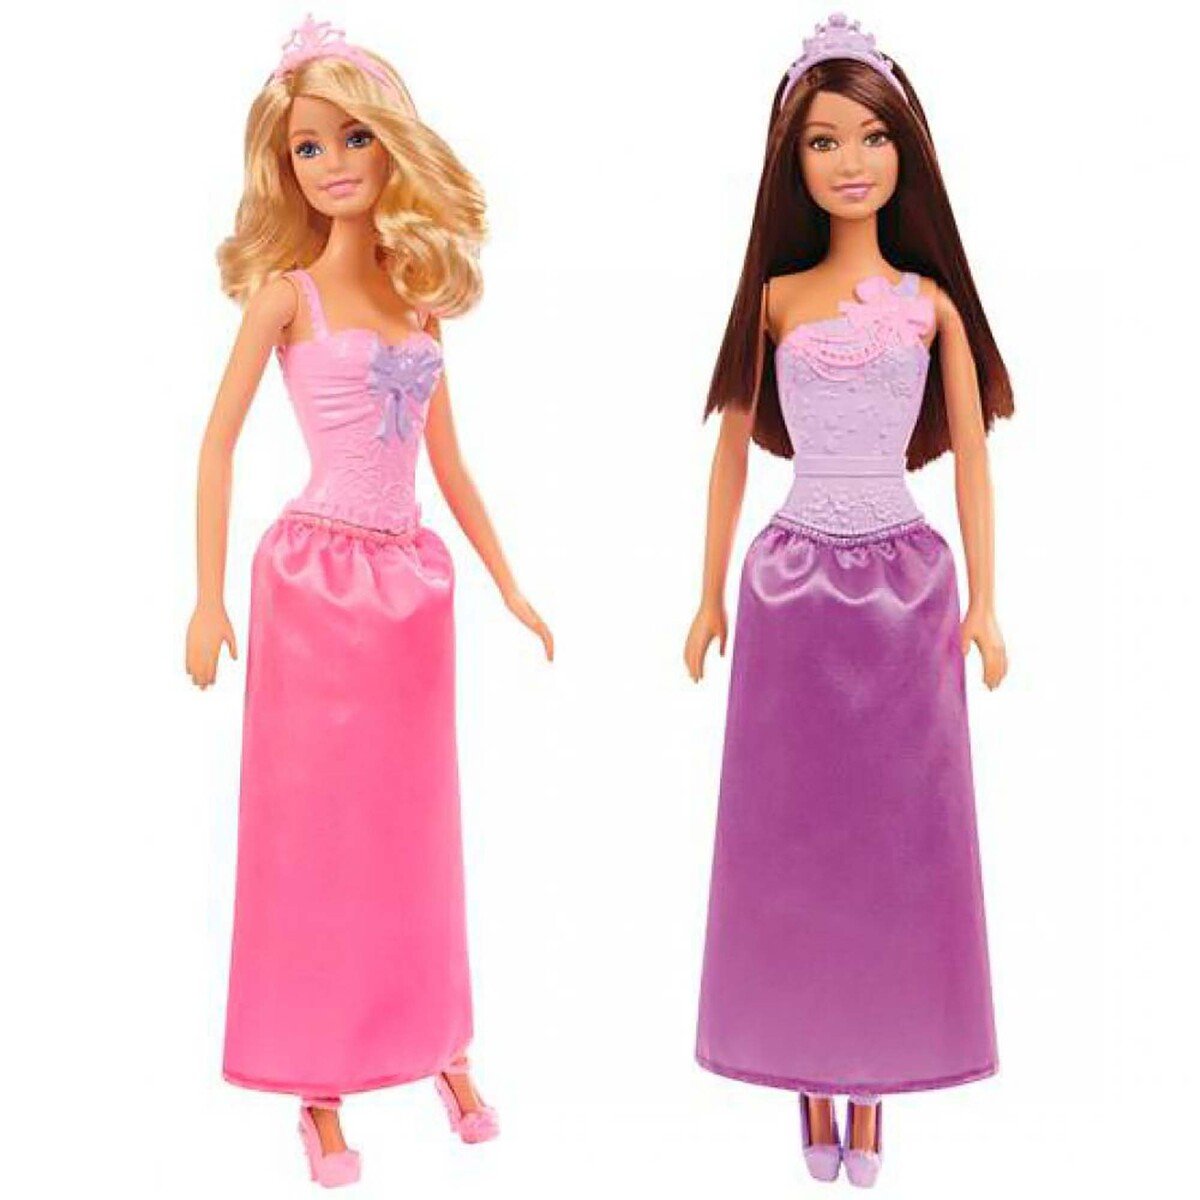 Barbie Basic Princess Doll, Assorted, DMM06